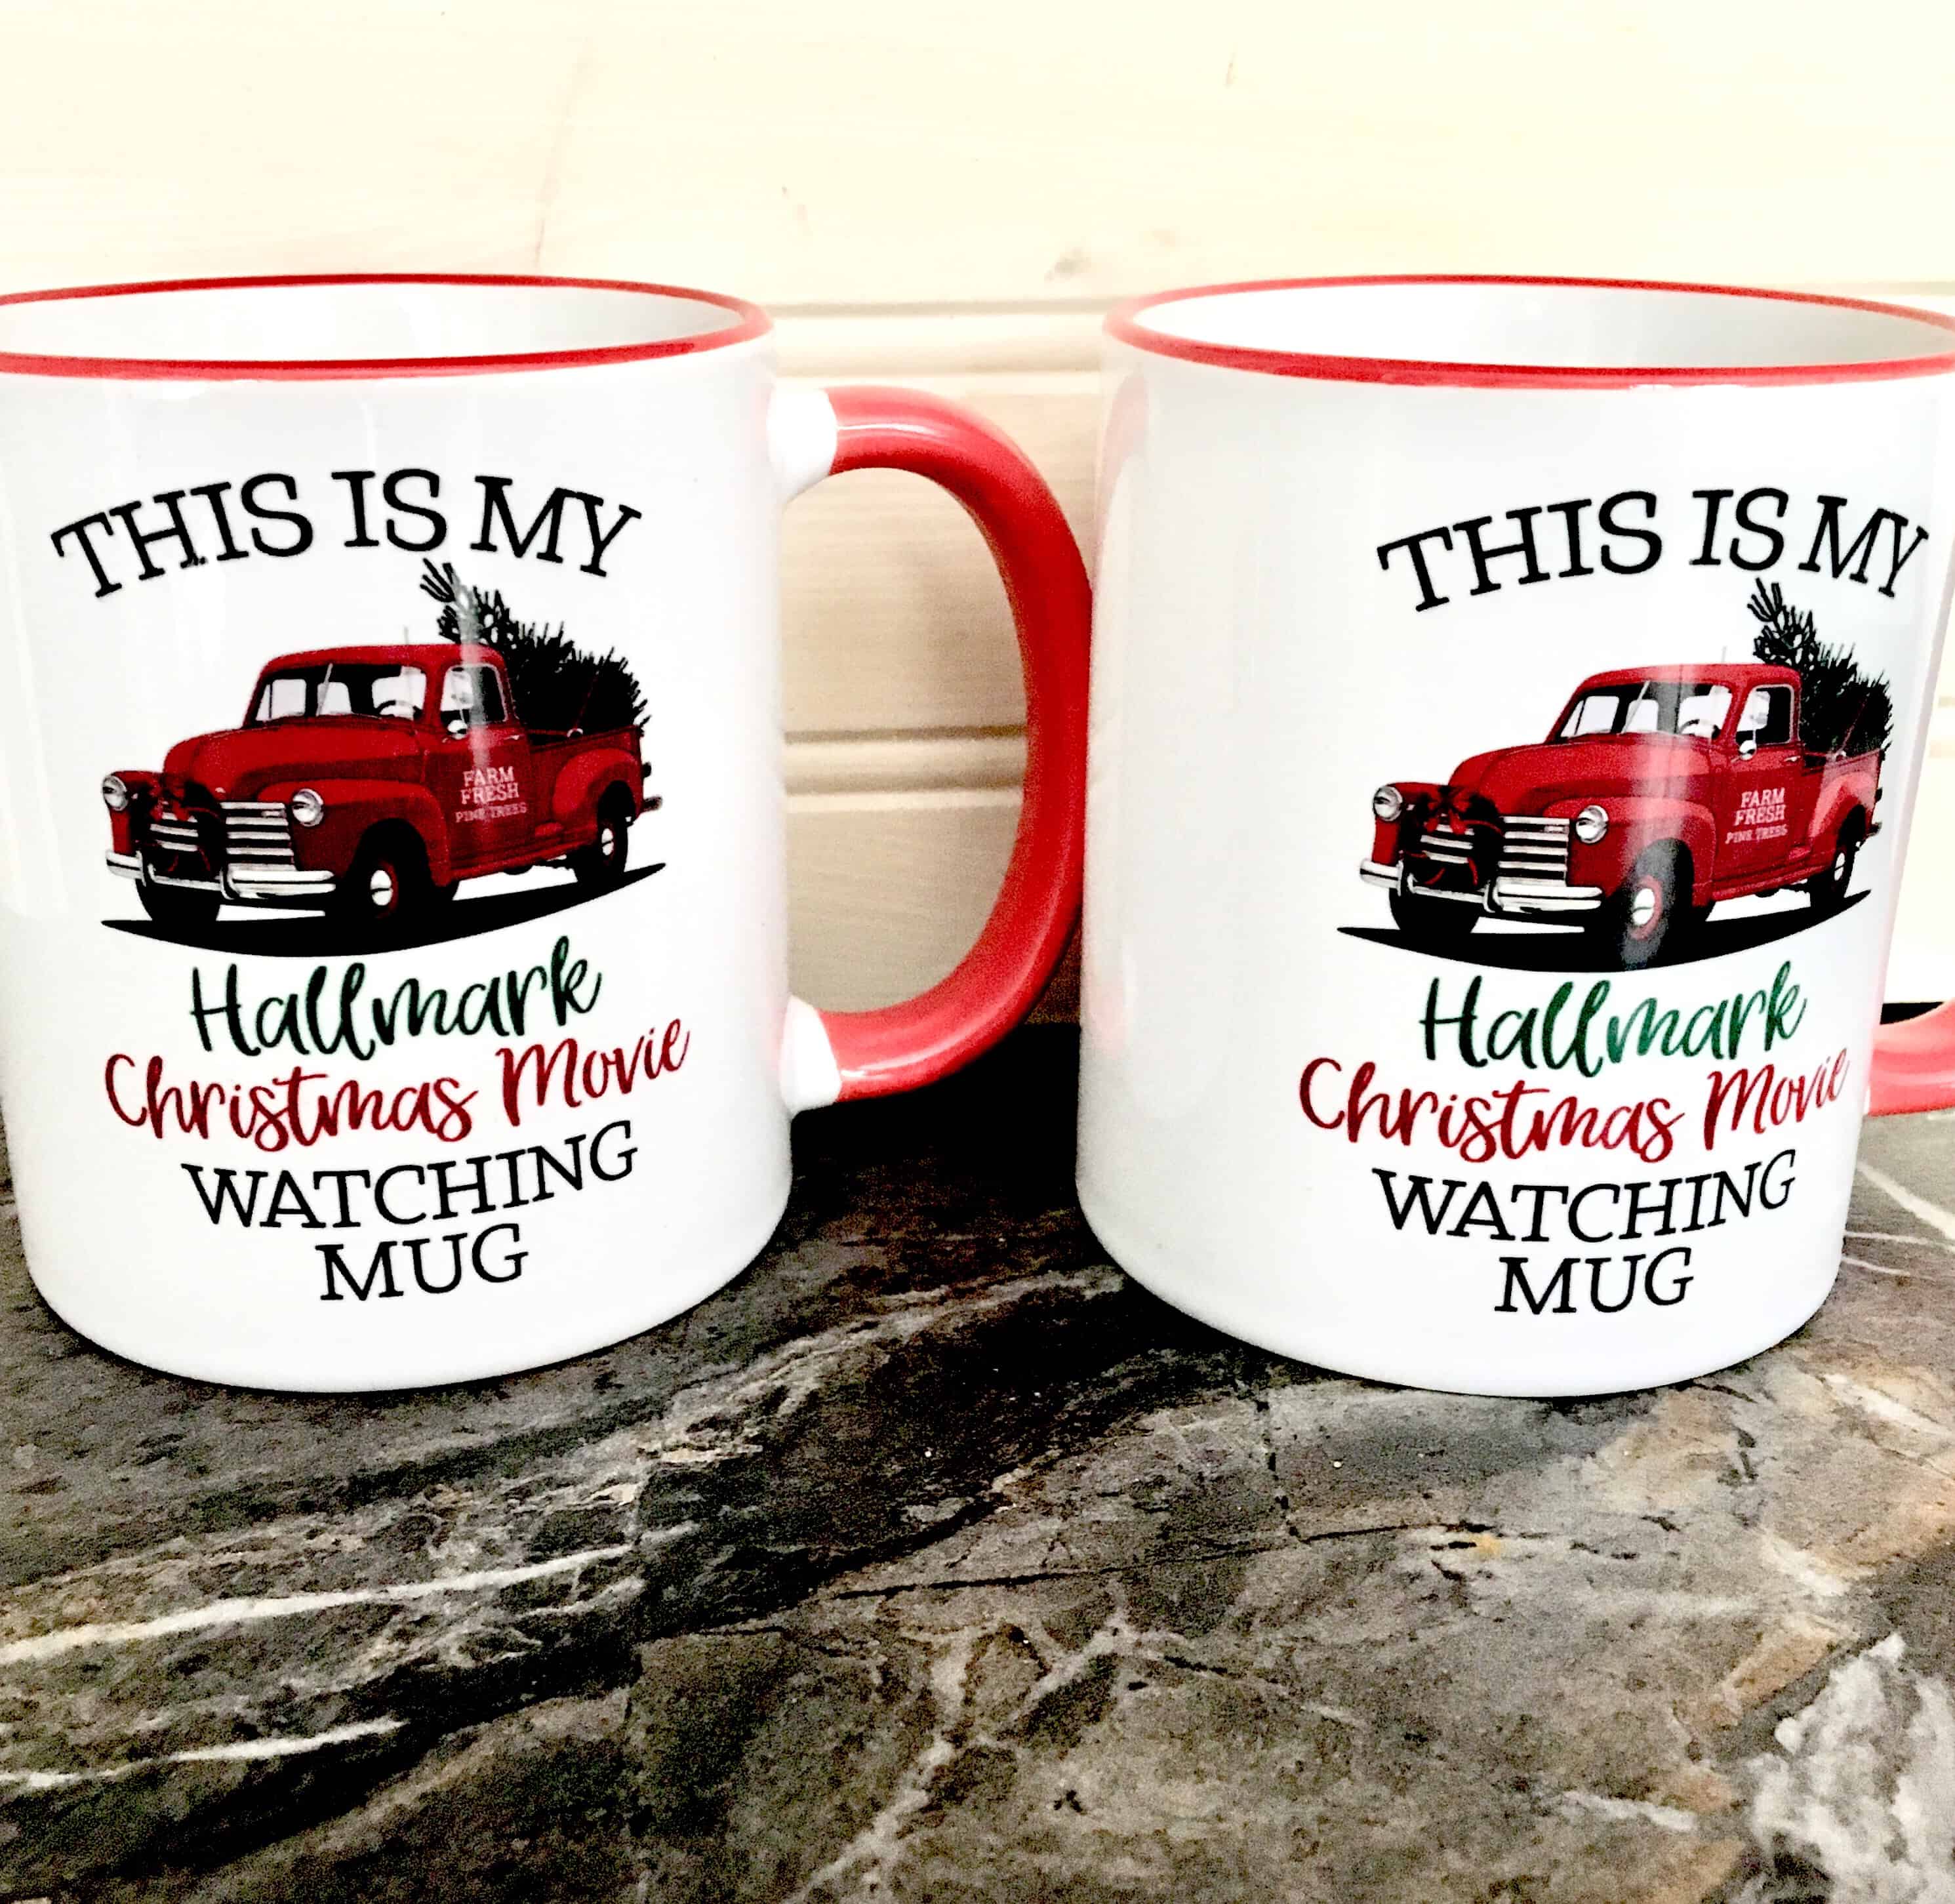 Hallmark Christmas mugs 2018